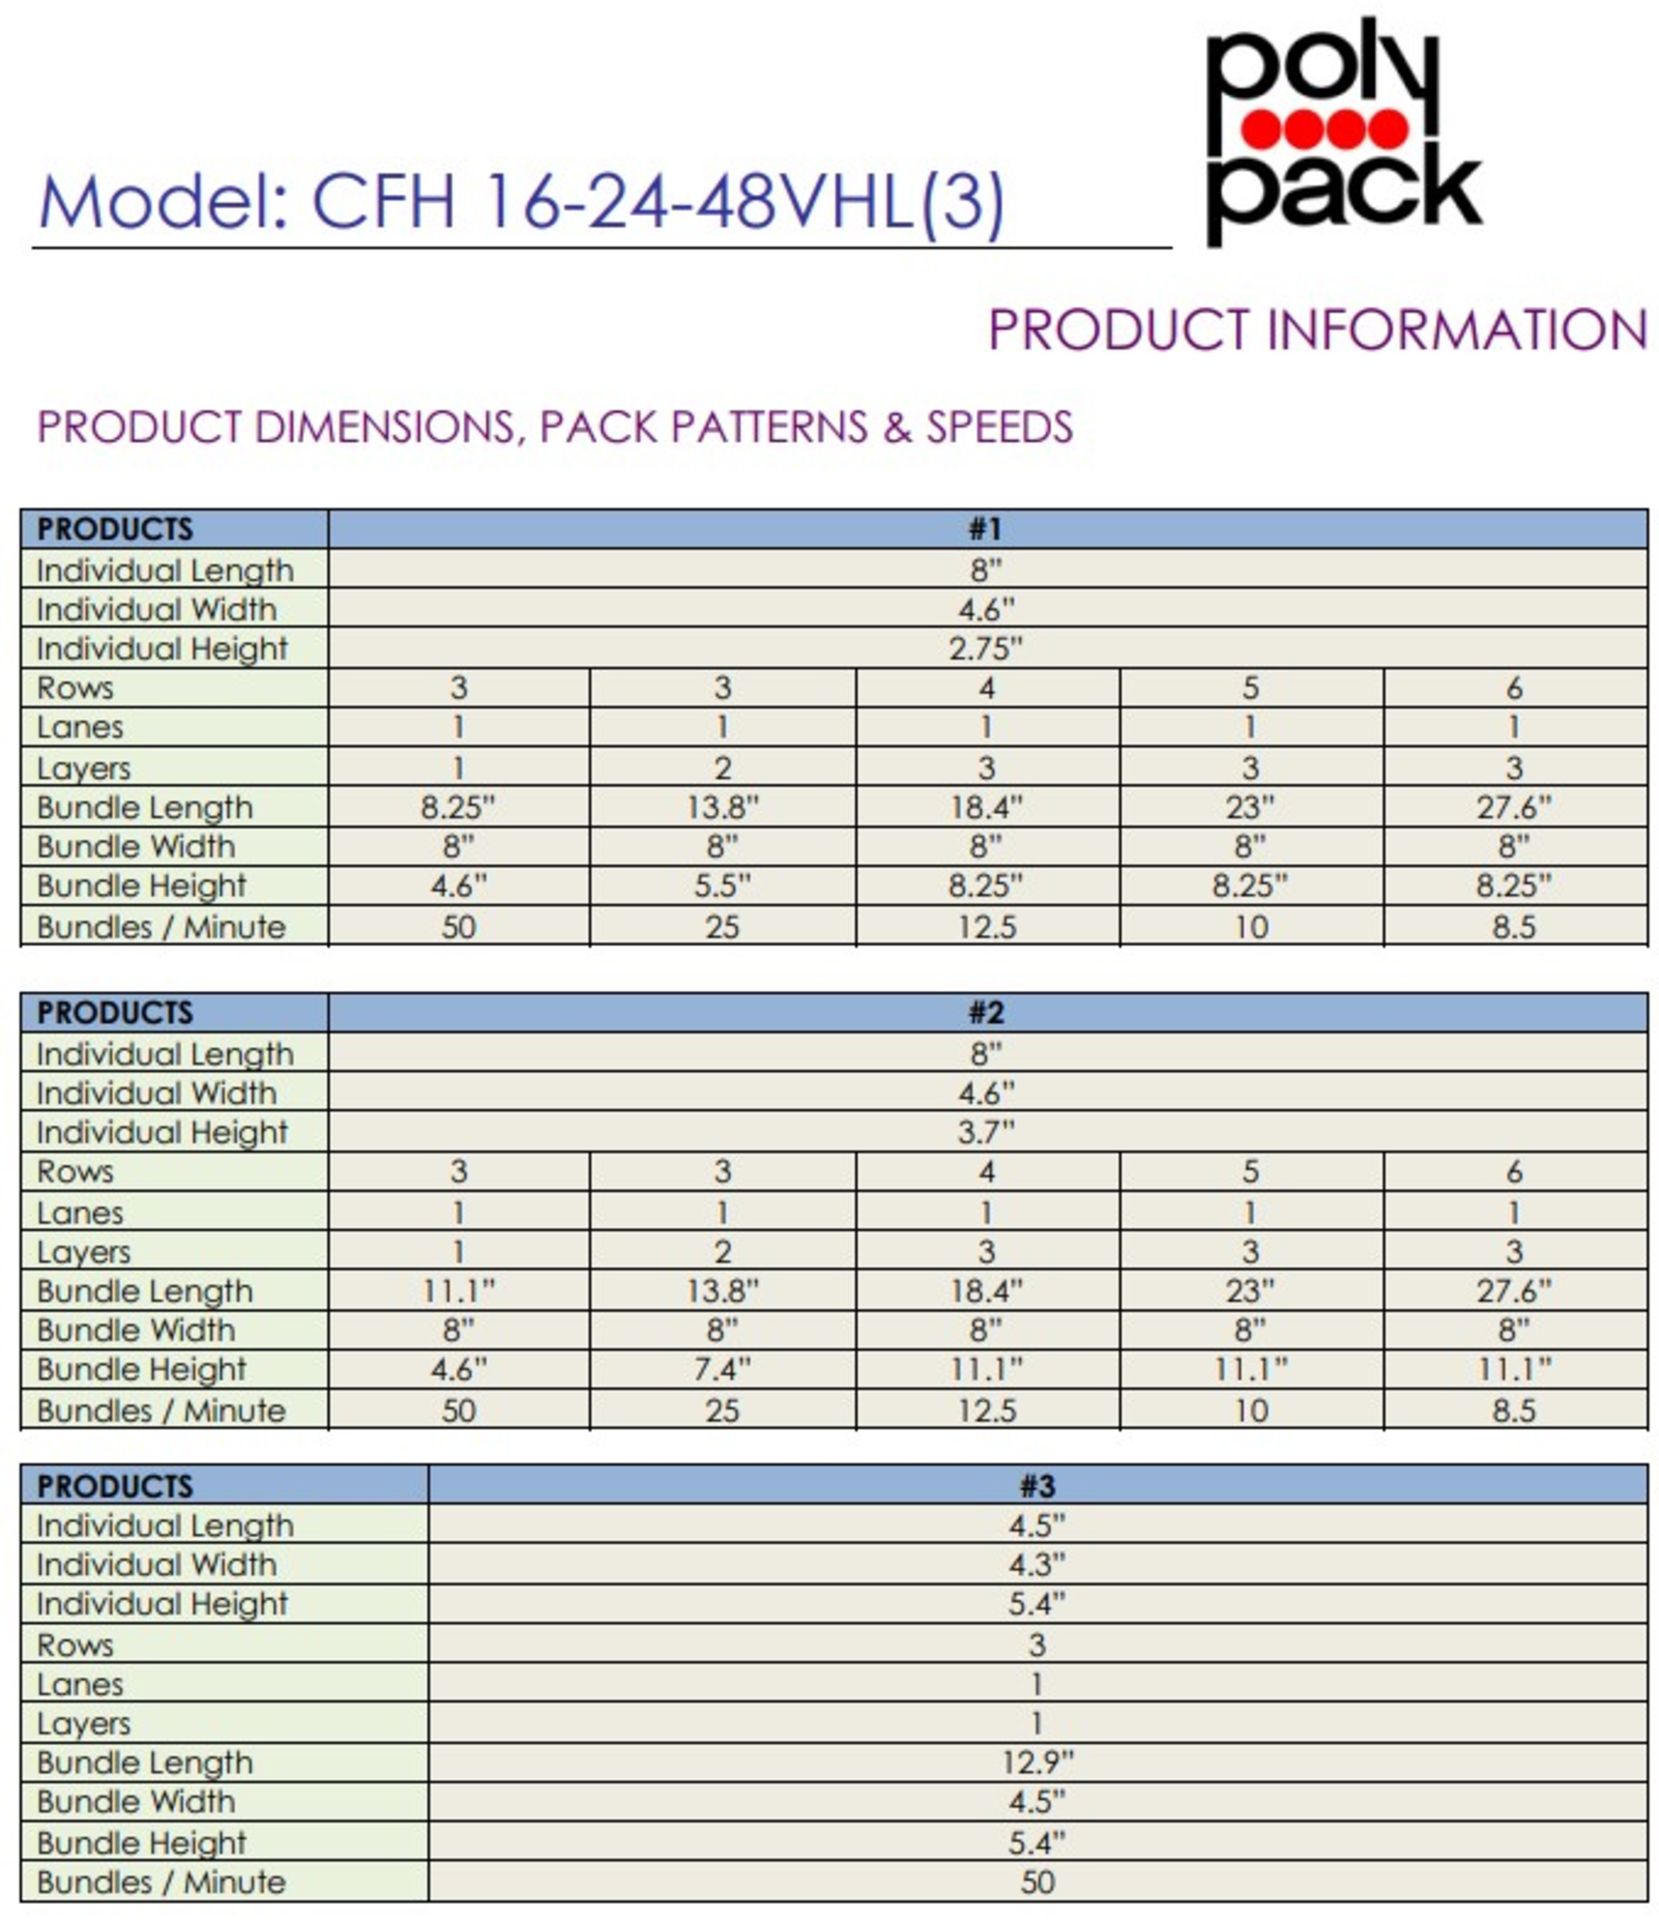 2010 SHRINK WRAPPER FULLY AUTOMATIC, BRAND: POLY PACK, MODEL CFH 16-24-48VHL(3), 600V, 40AMP, - Image 28 of 29